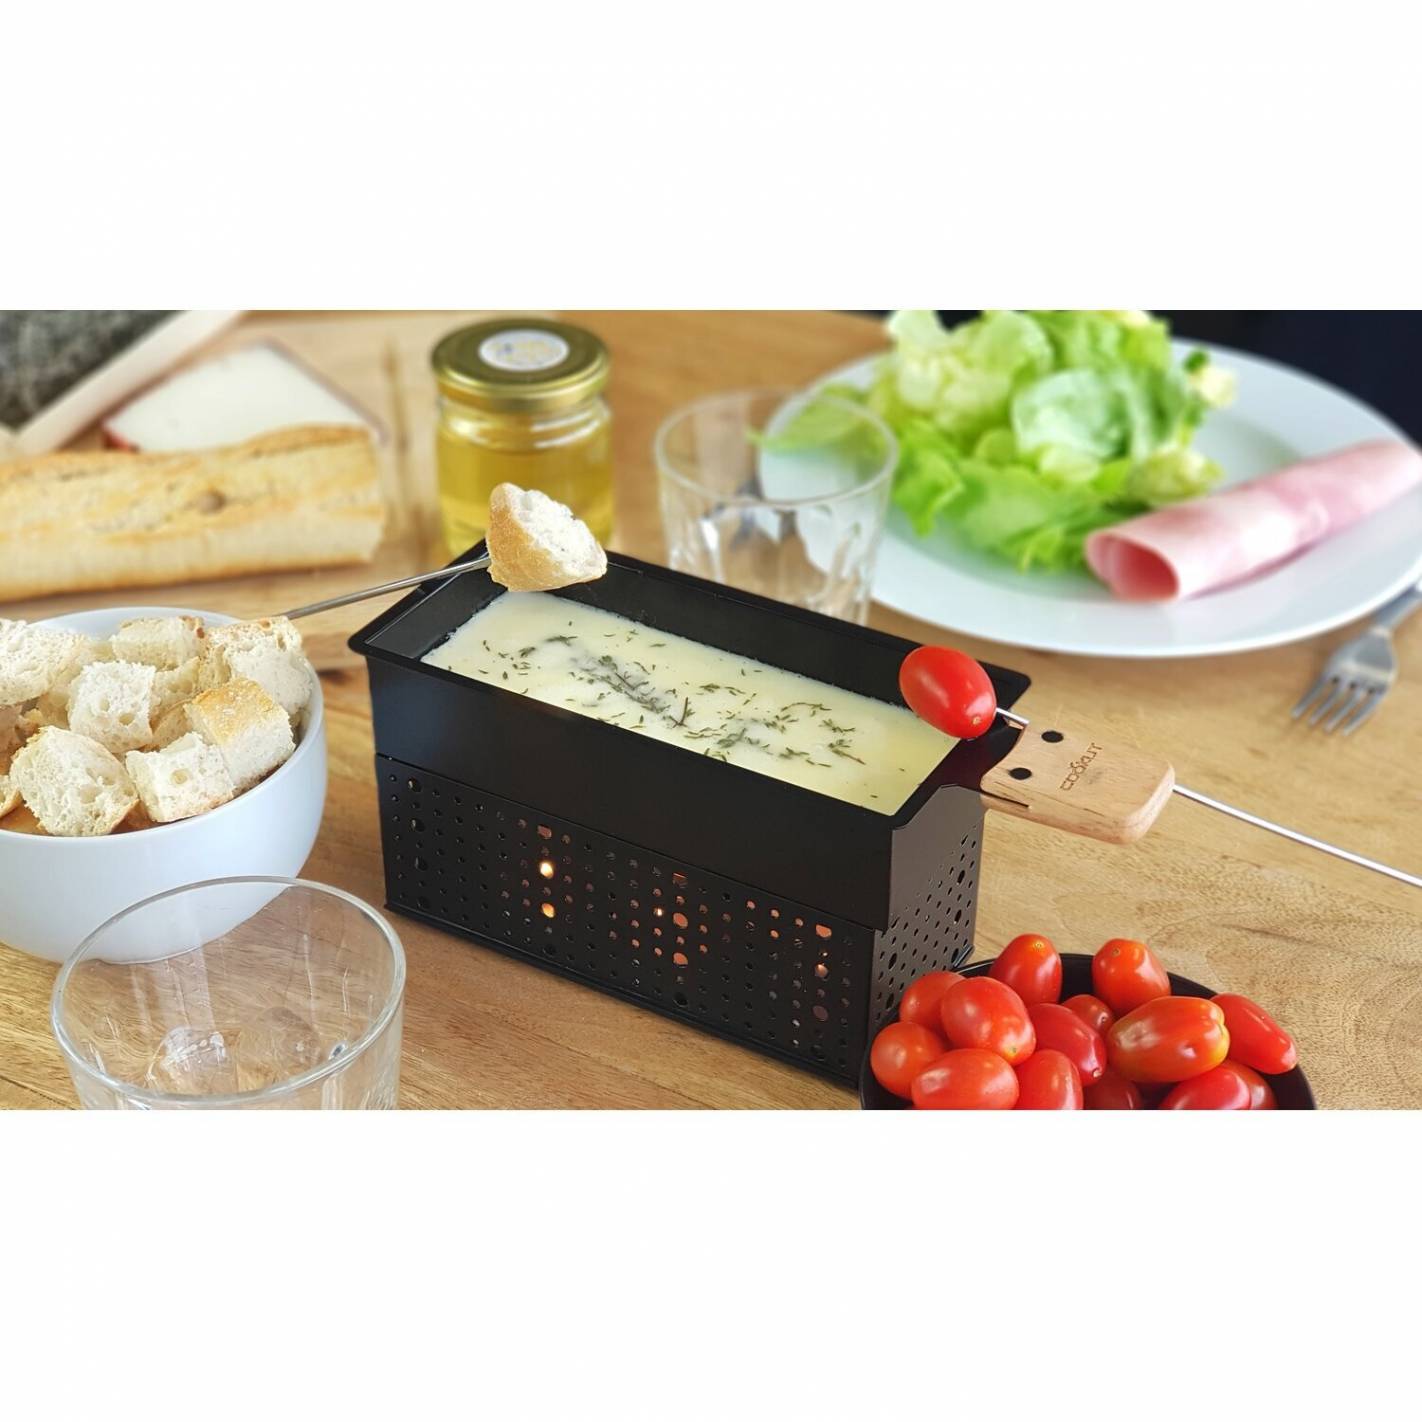 https://www.just4camper.es/7804302-thickbox_default/kit-fondue-de-raclette-y-velas-para-2-personas-cocina-cocinando-raclette-cookut-rg-914537.jpg